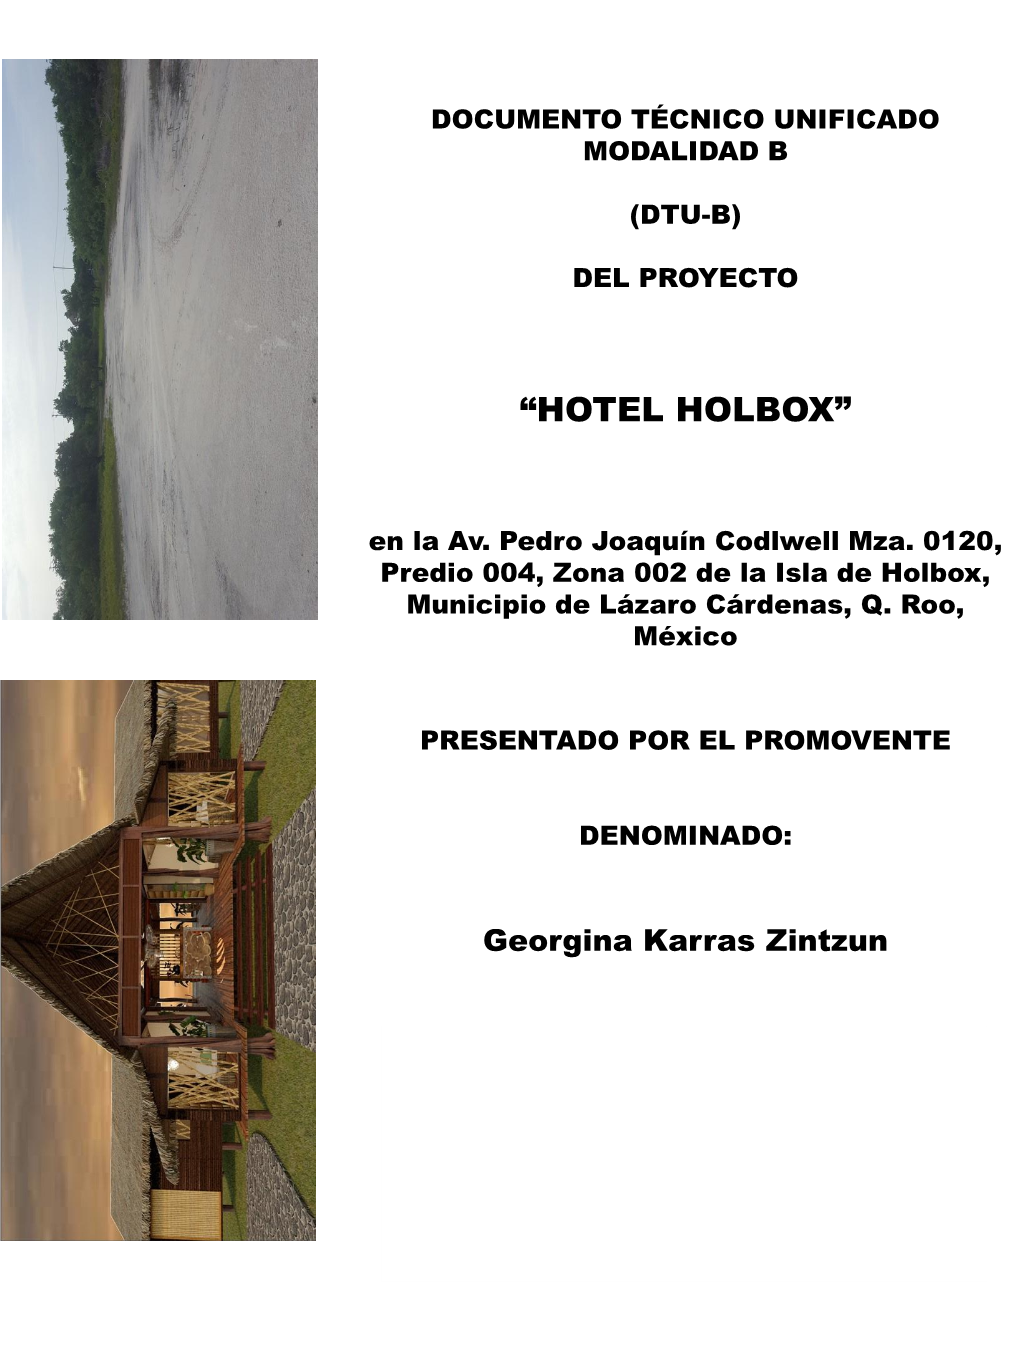 “Hotel Holbox”